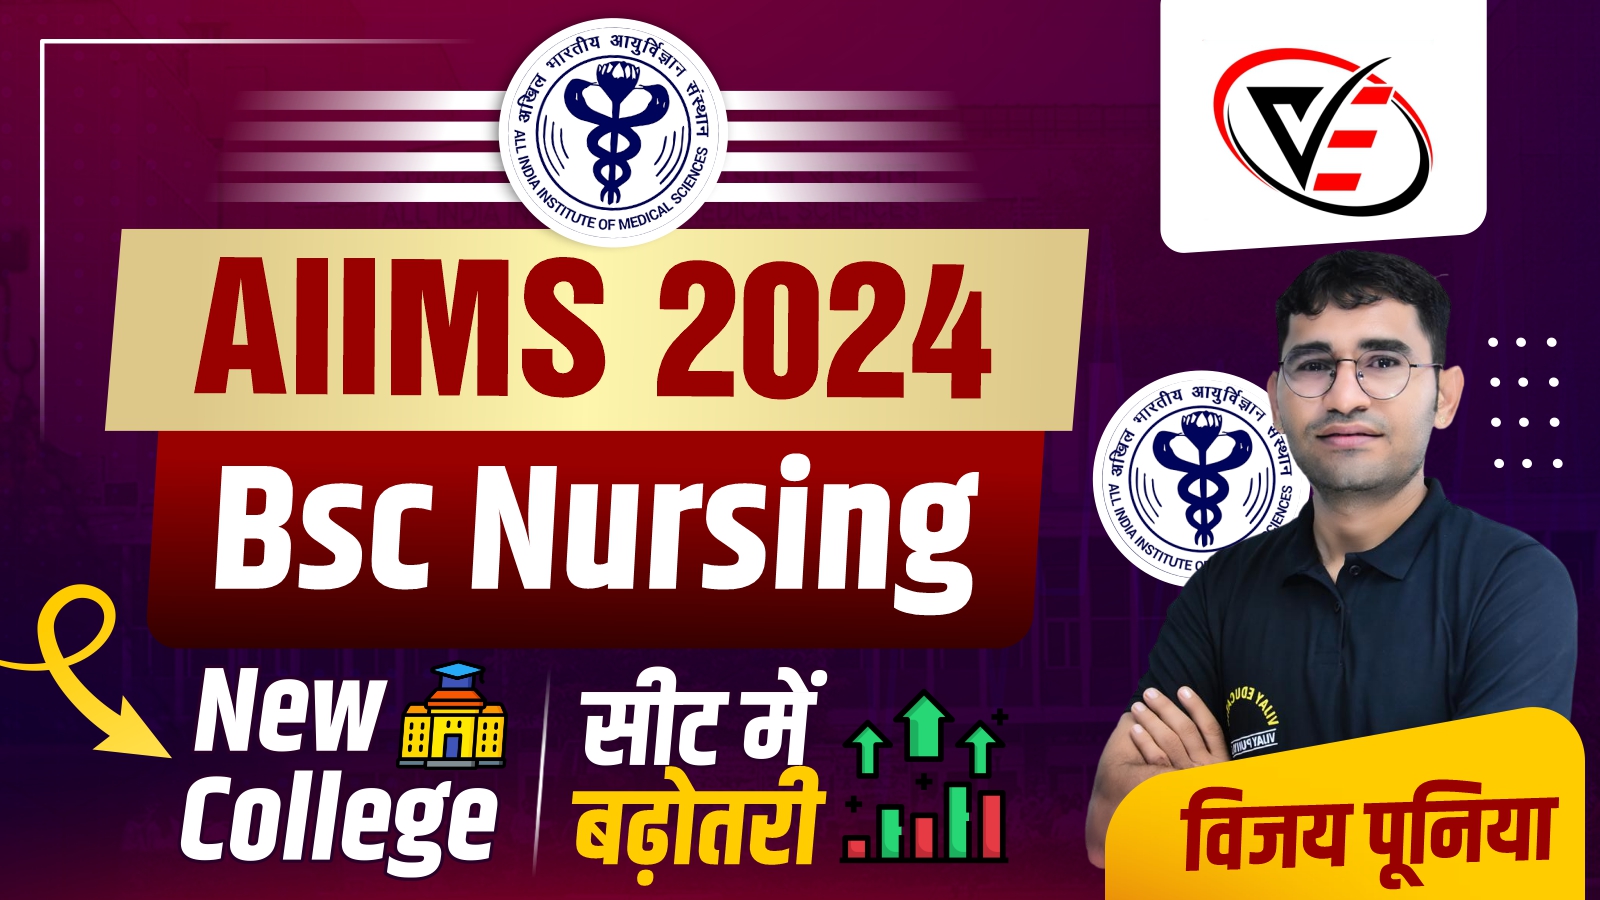 AIIMS BSC Nursing 2024 New College List